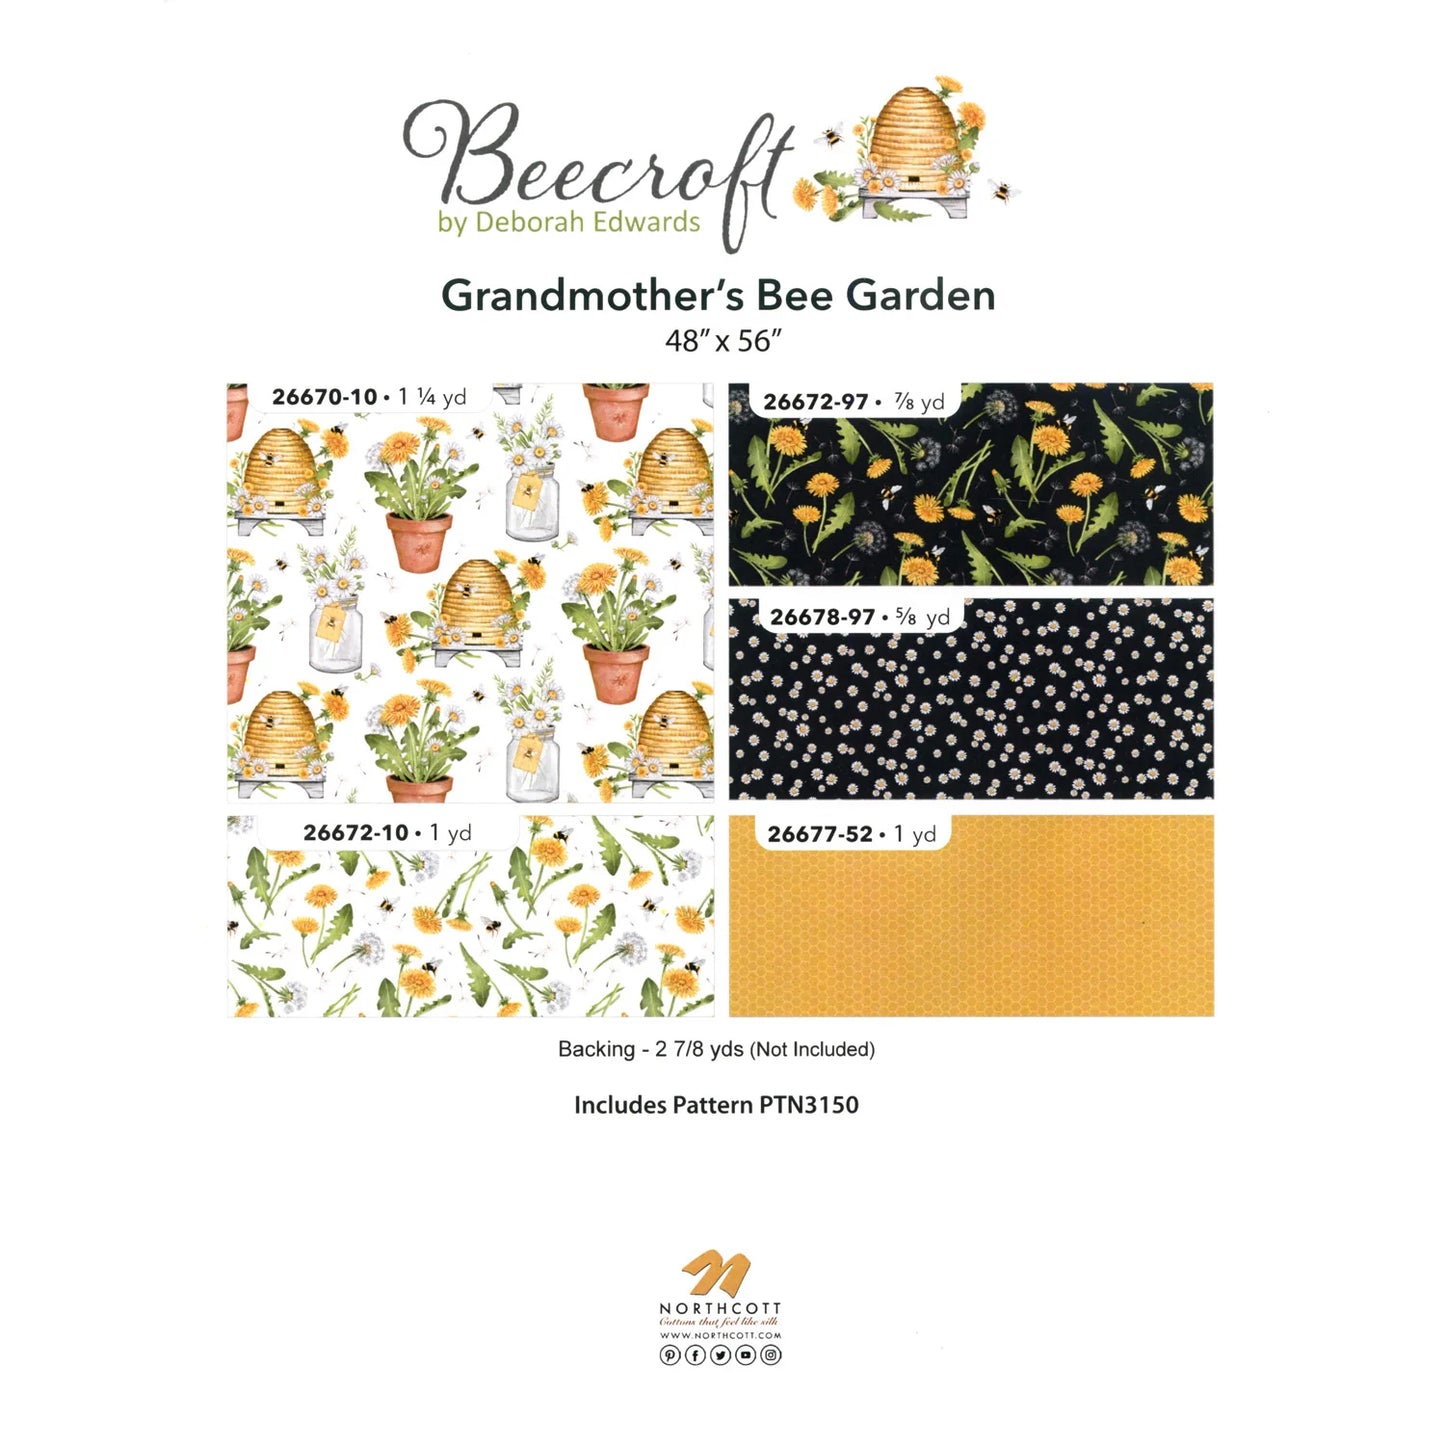 Grandma’s Bee Garden Kit